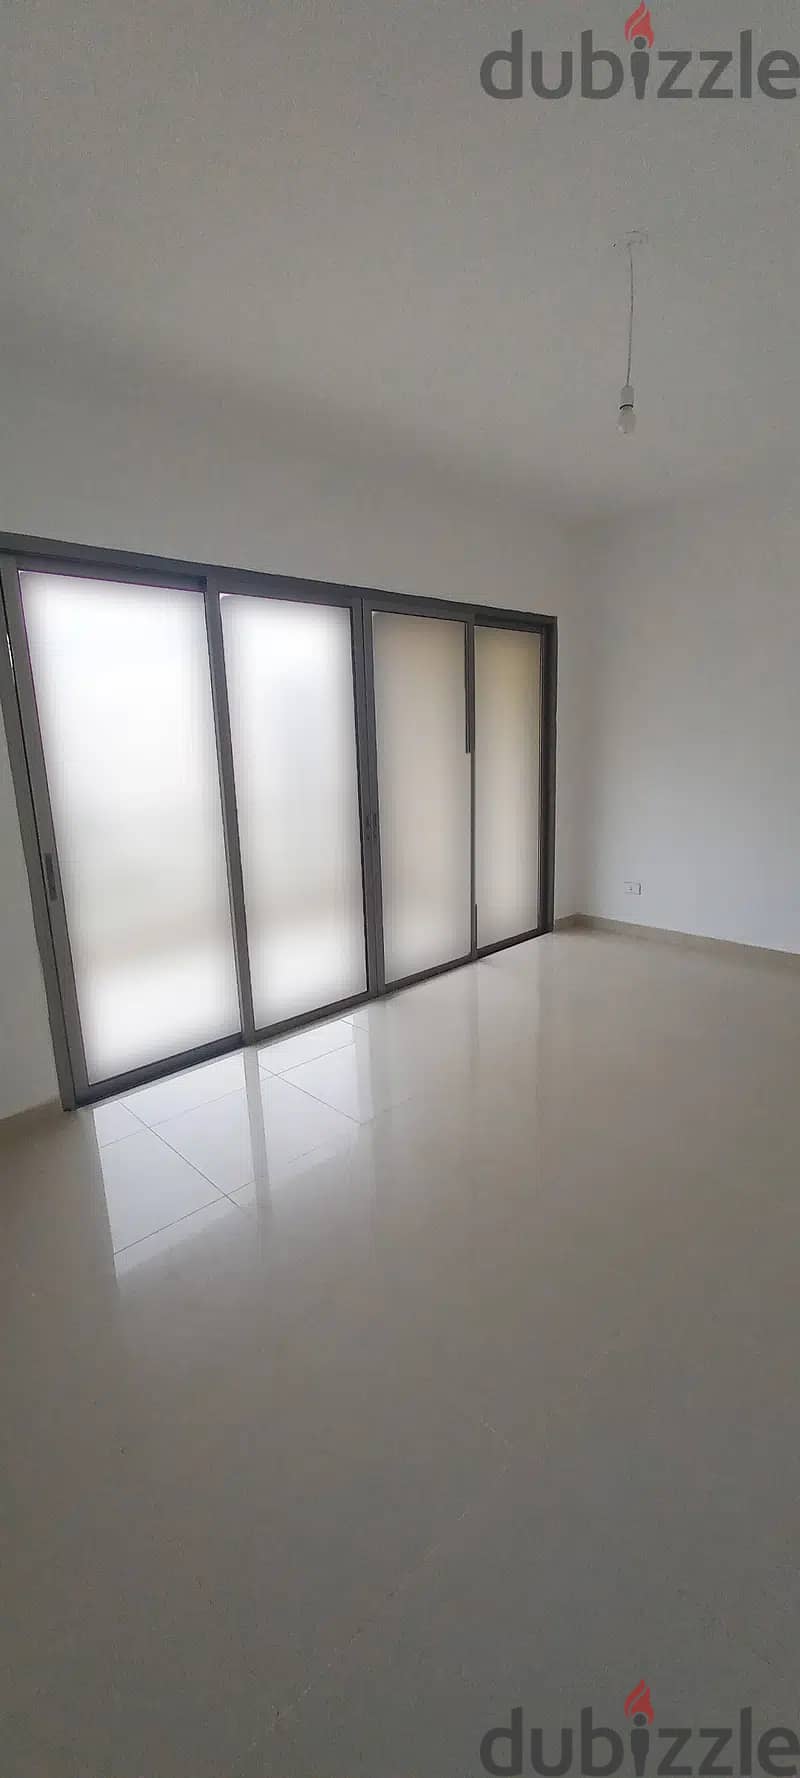 BRAND NEW Apartment for sale in Dibbiyeh,الدبية! REF#DI101918 1